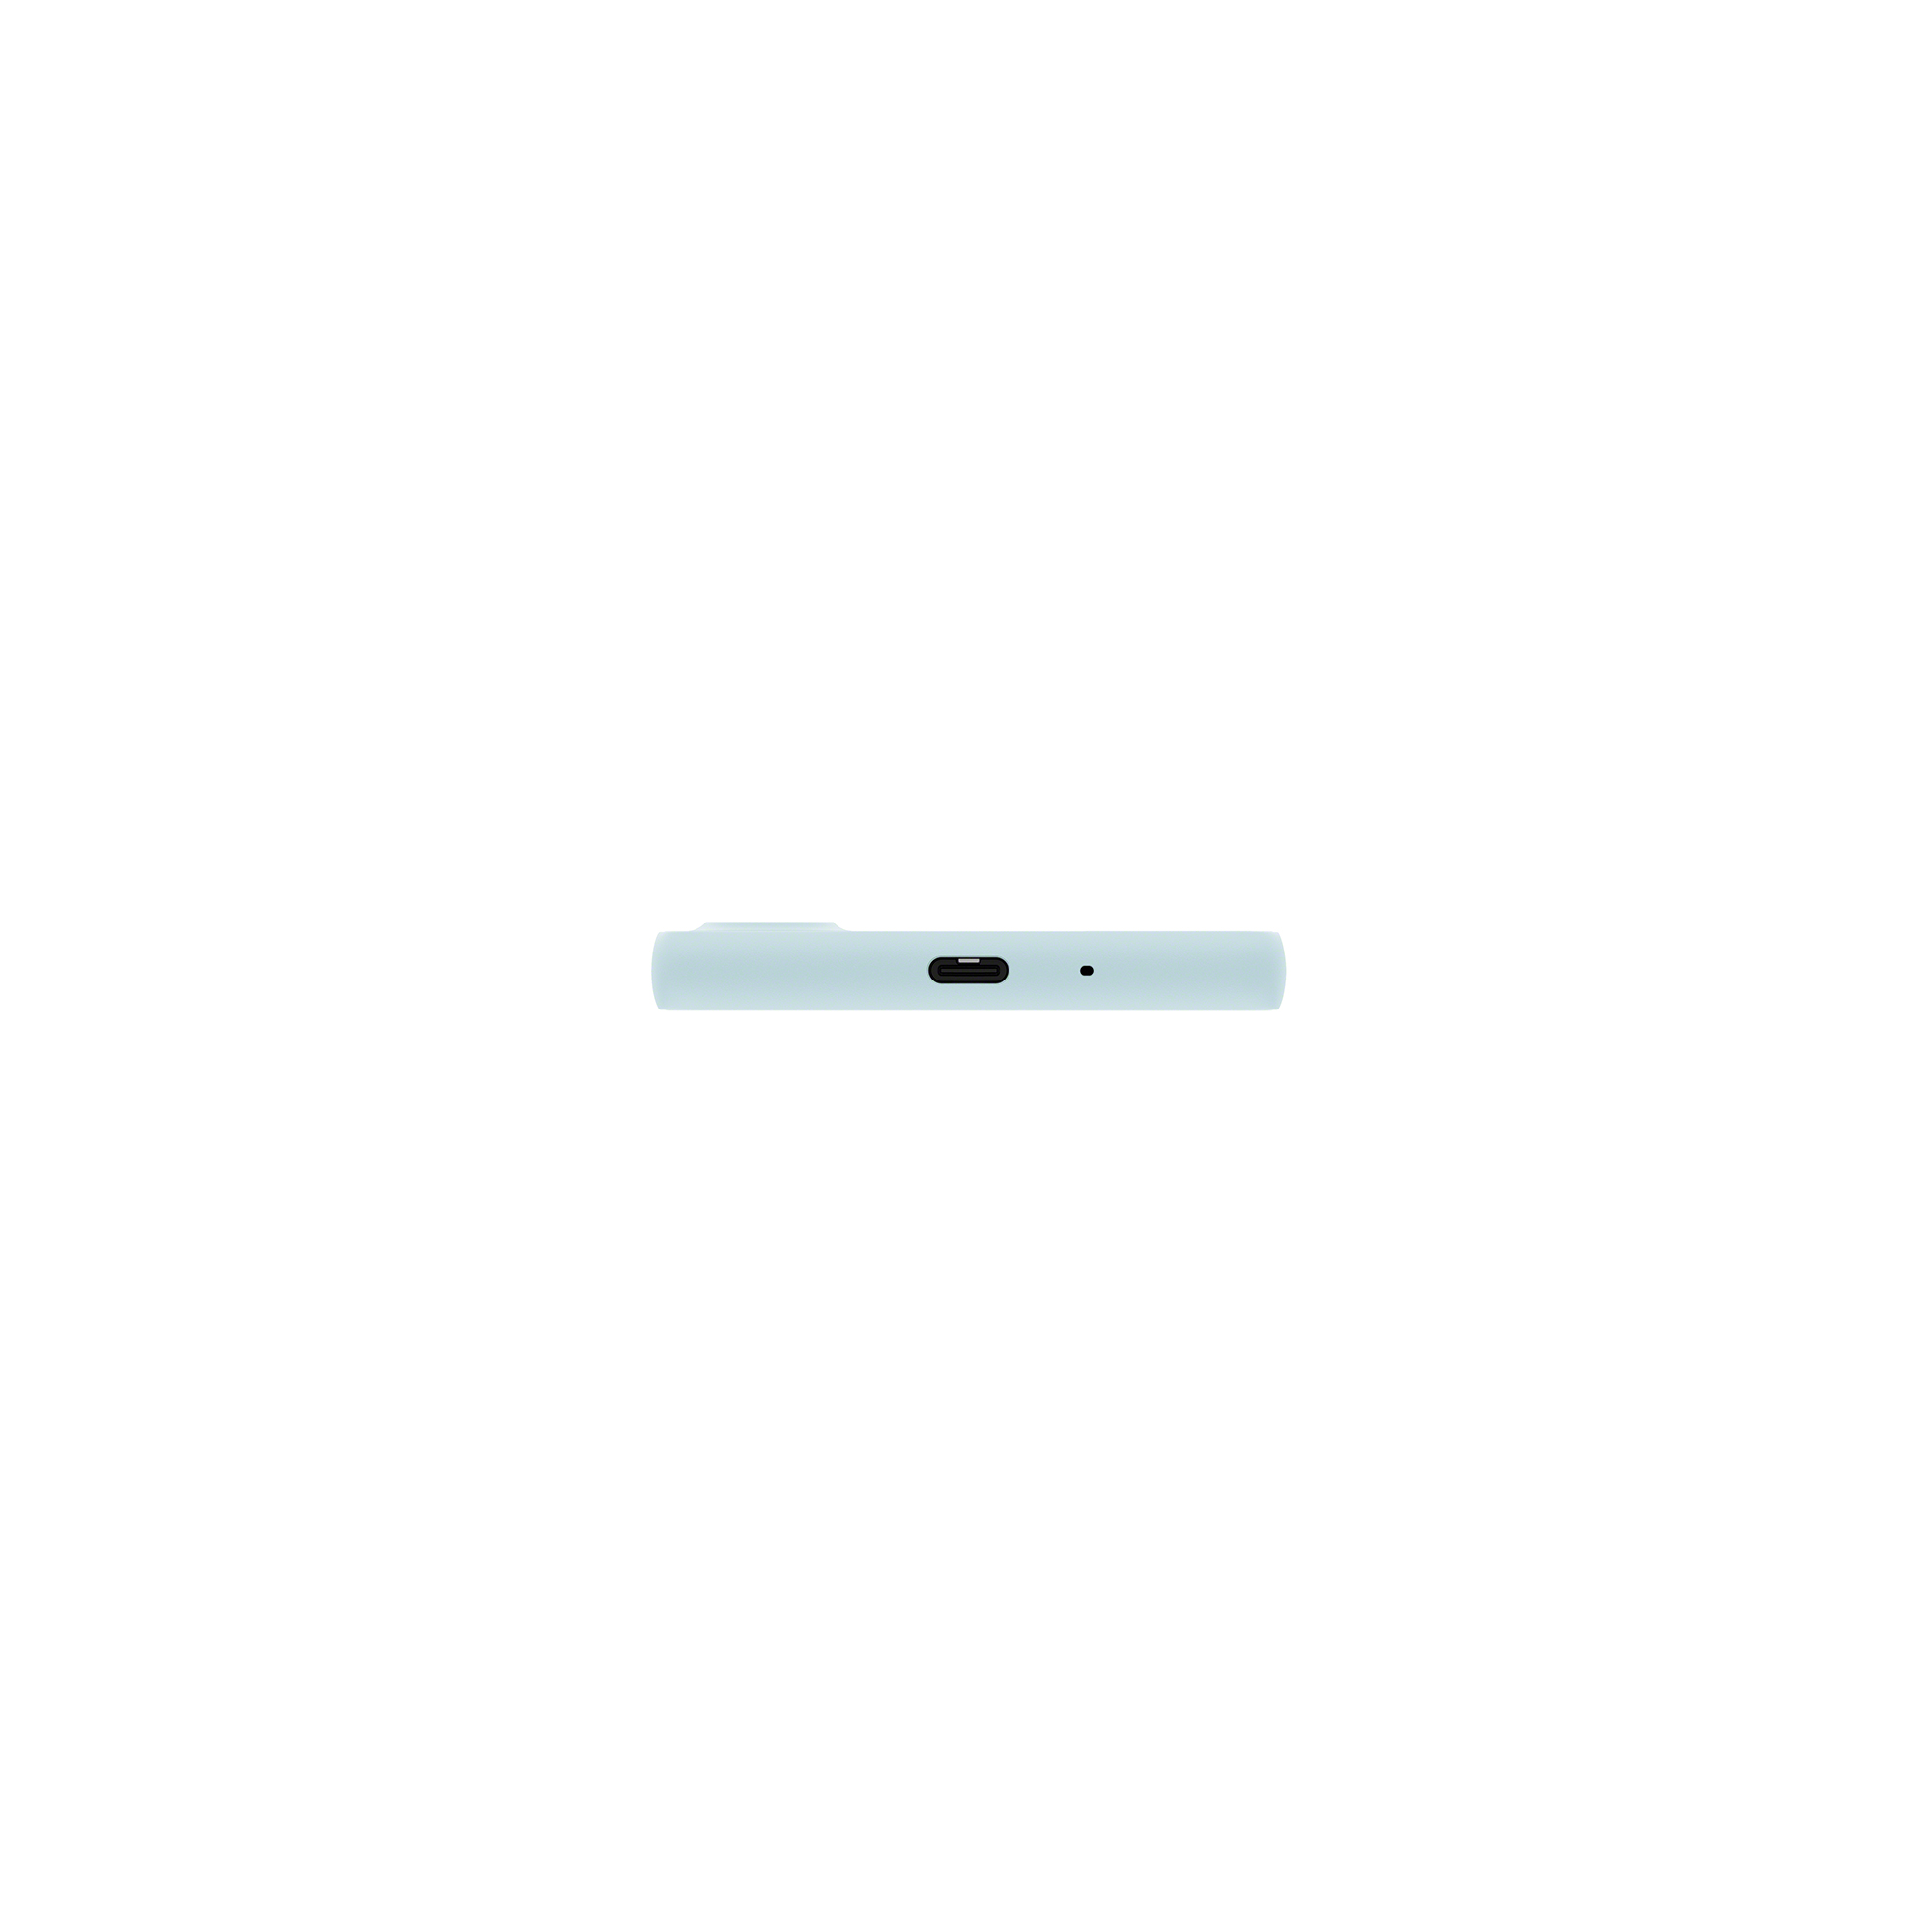  Xperia 10 VI藍色手機機身底部圖式